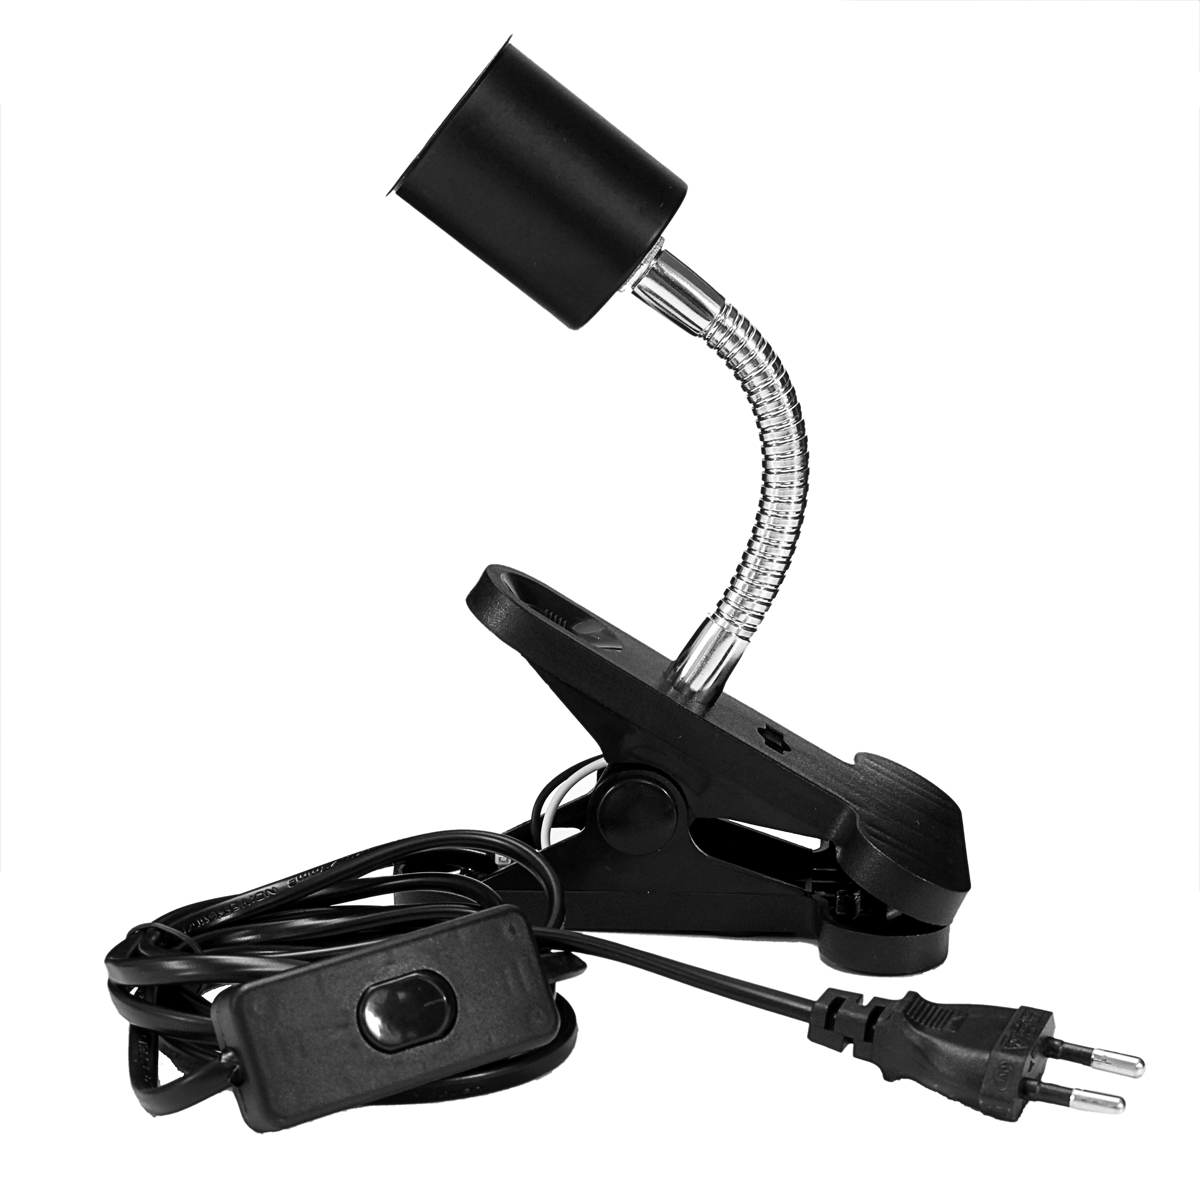 10CM-E27-Flexible-Pet-LED-Light-Lamp-Bulb-Adapter-Holder-Socket-with-Clip-On-Off-Switch-EU-US-Plug-1309591-3